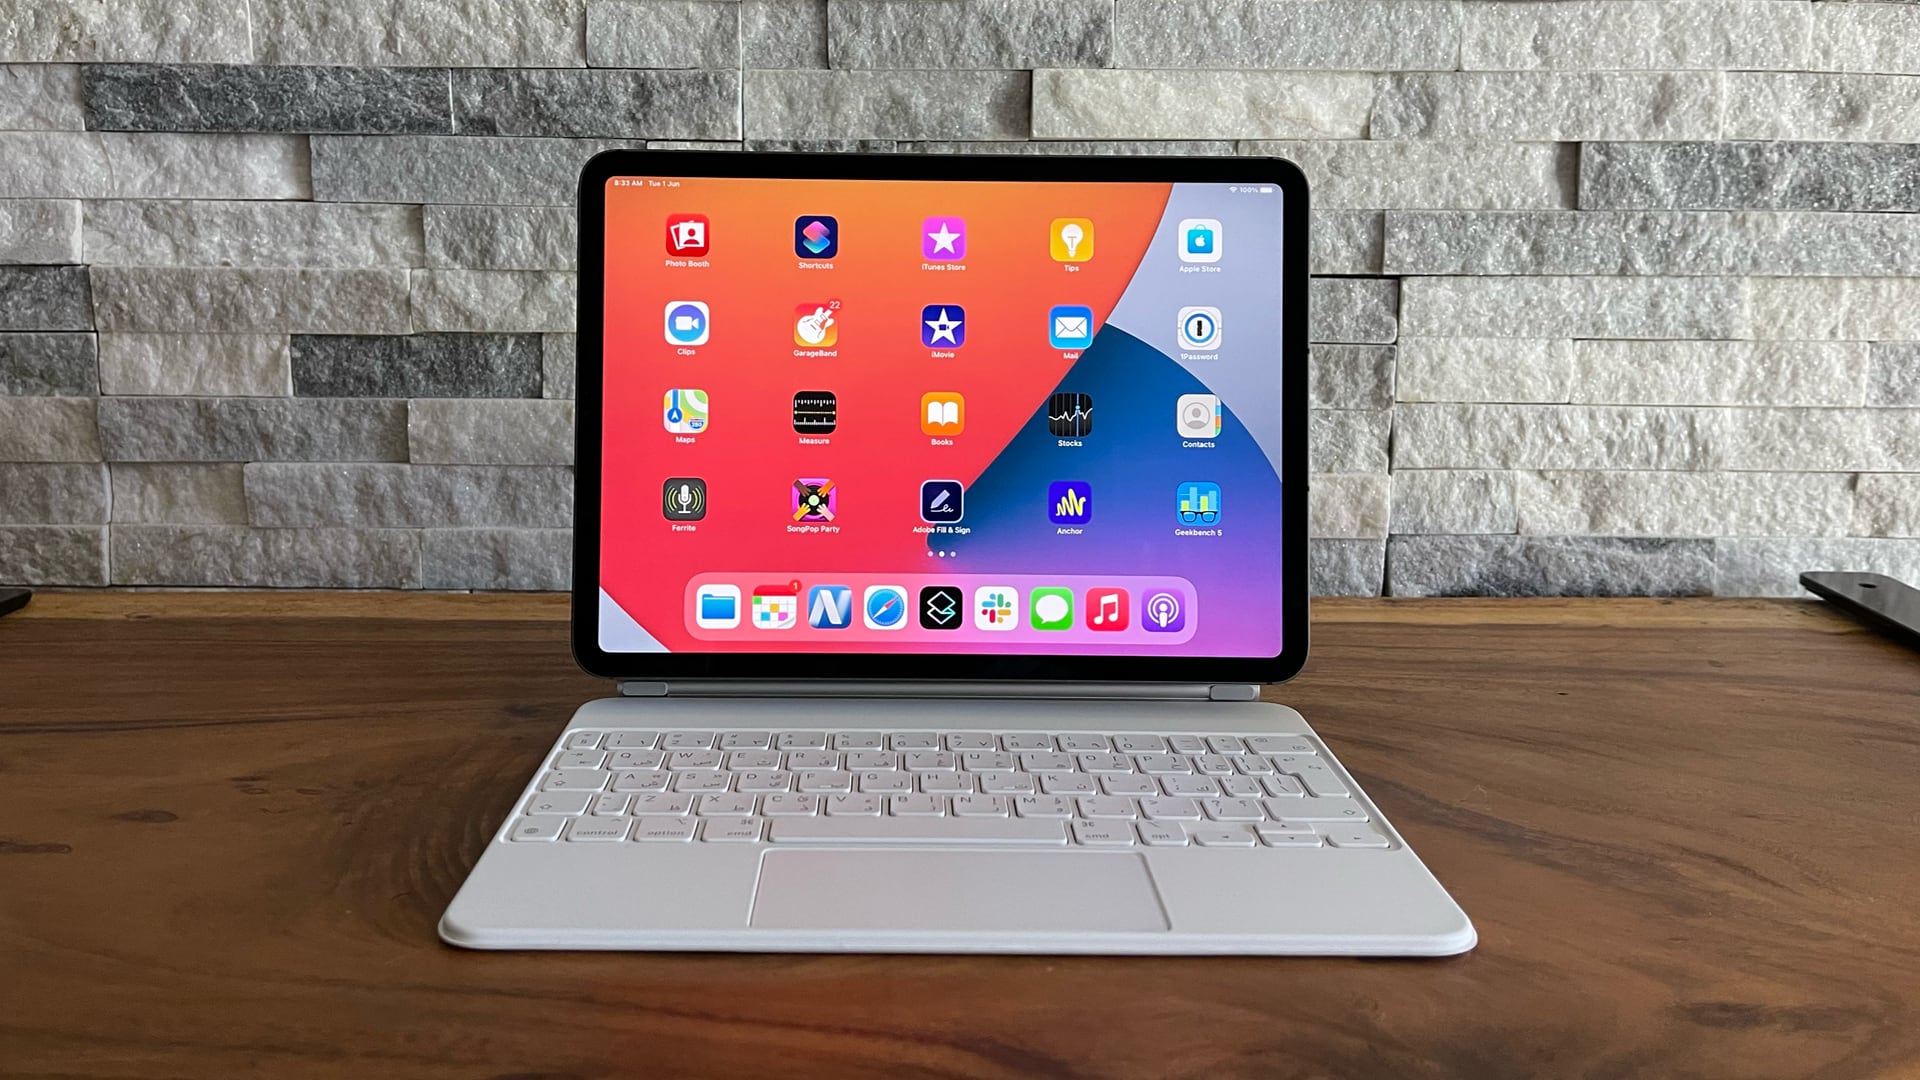 Apple iPad Pro 11 (2021) on table with keyboard